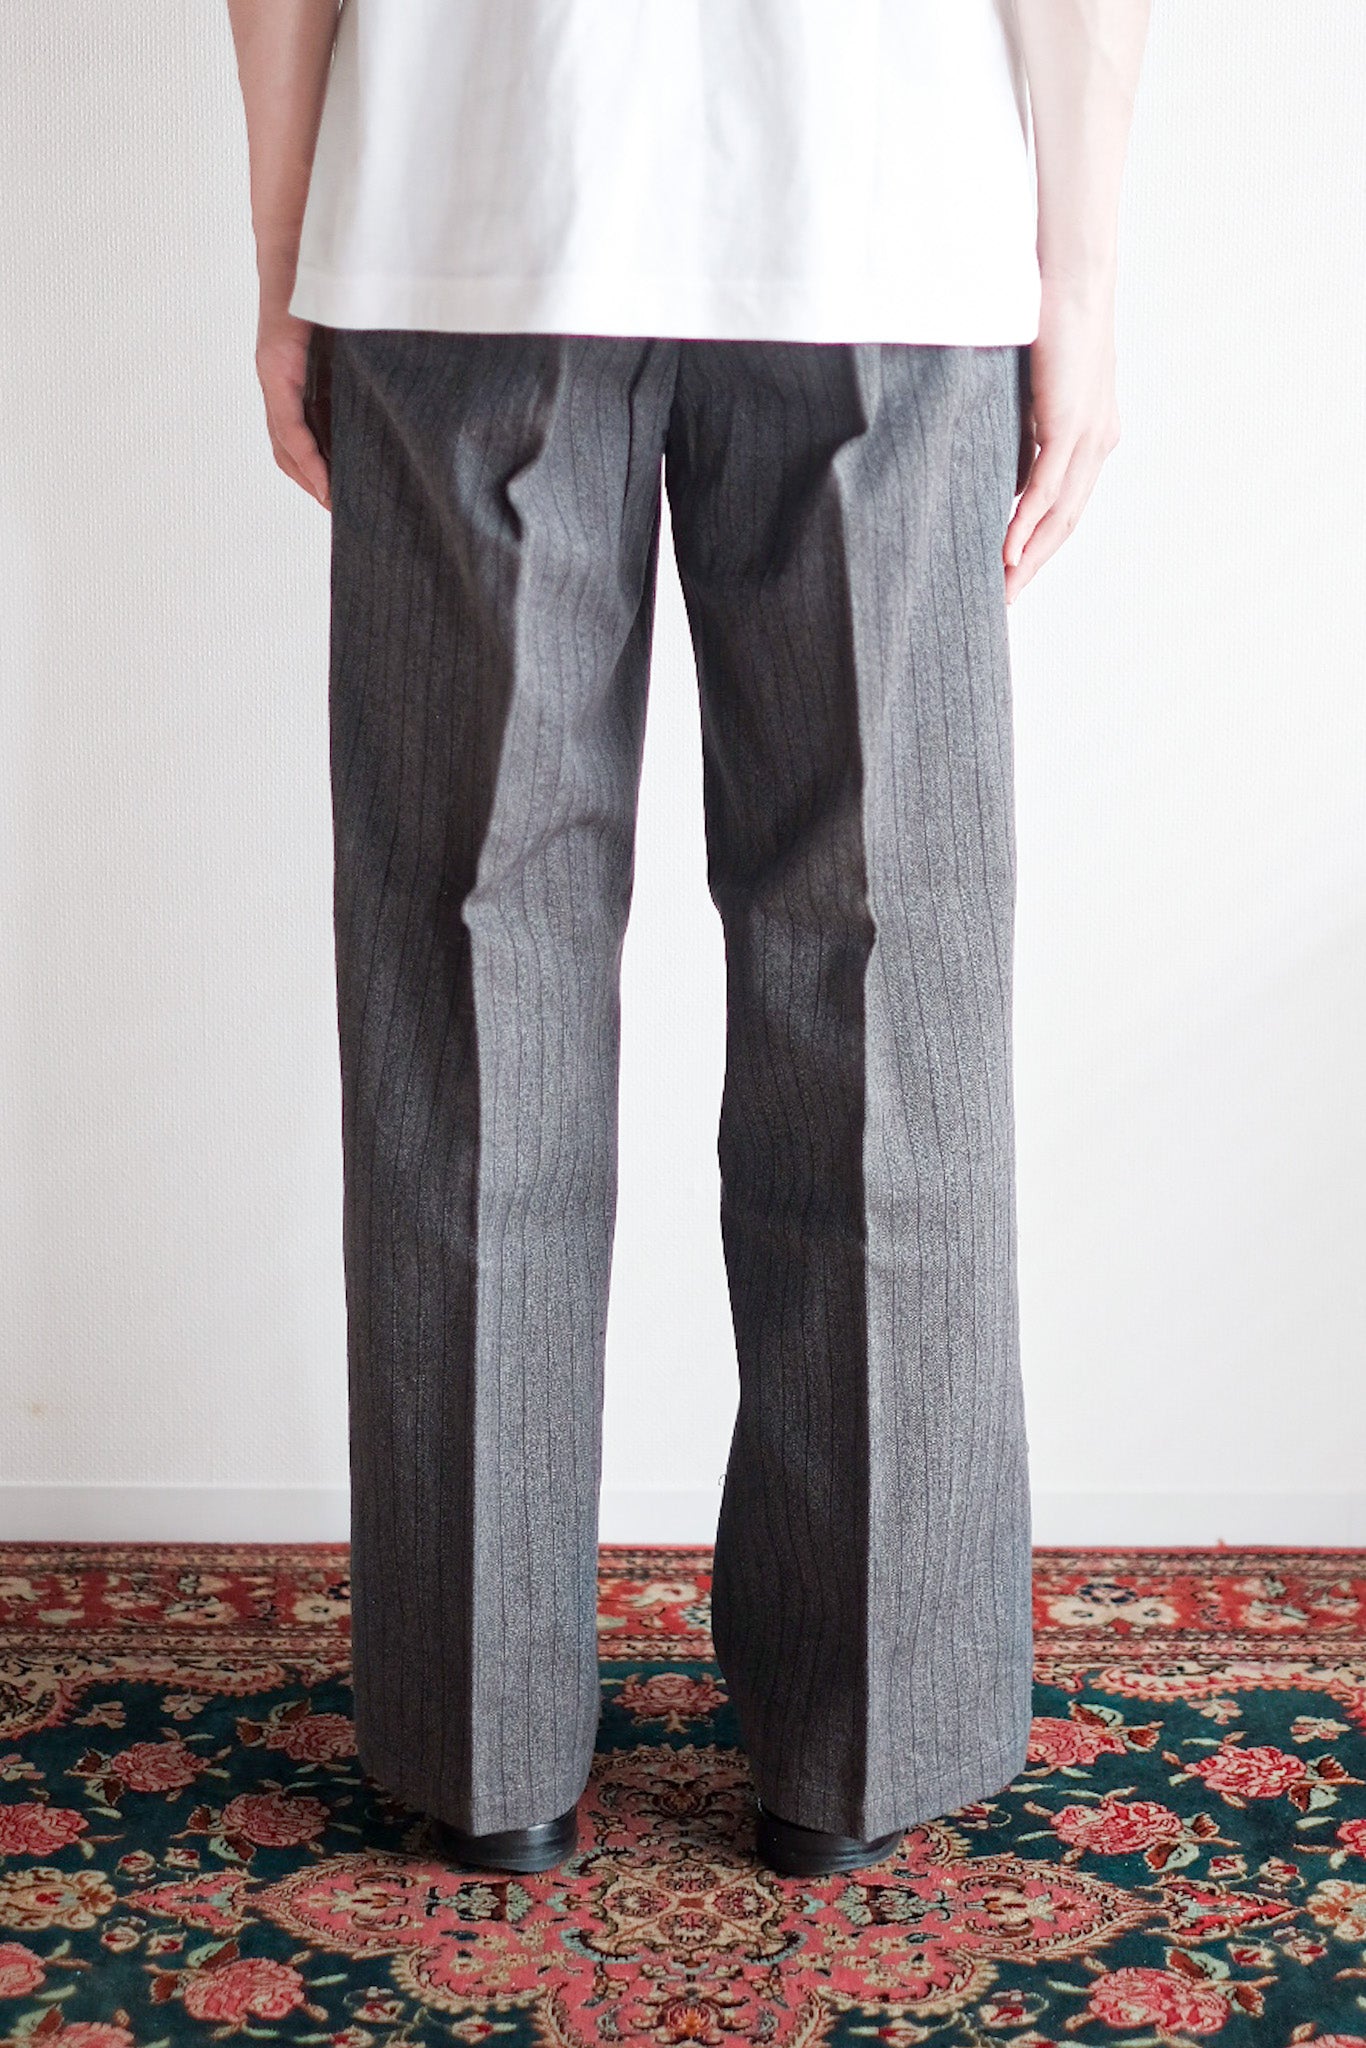 [~ 40's] French Vintage Salt & Pepper Cotton Striped Work Pants "DEAD STOCK"